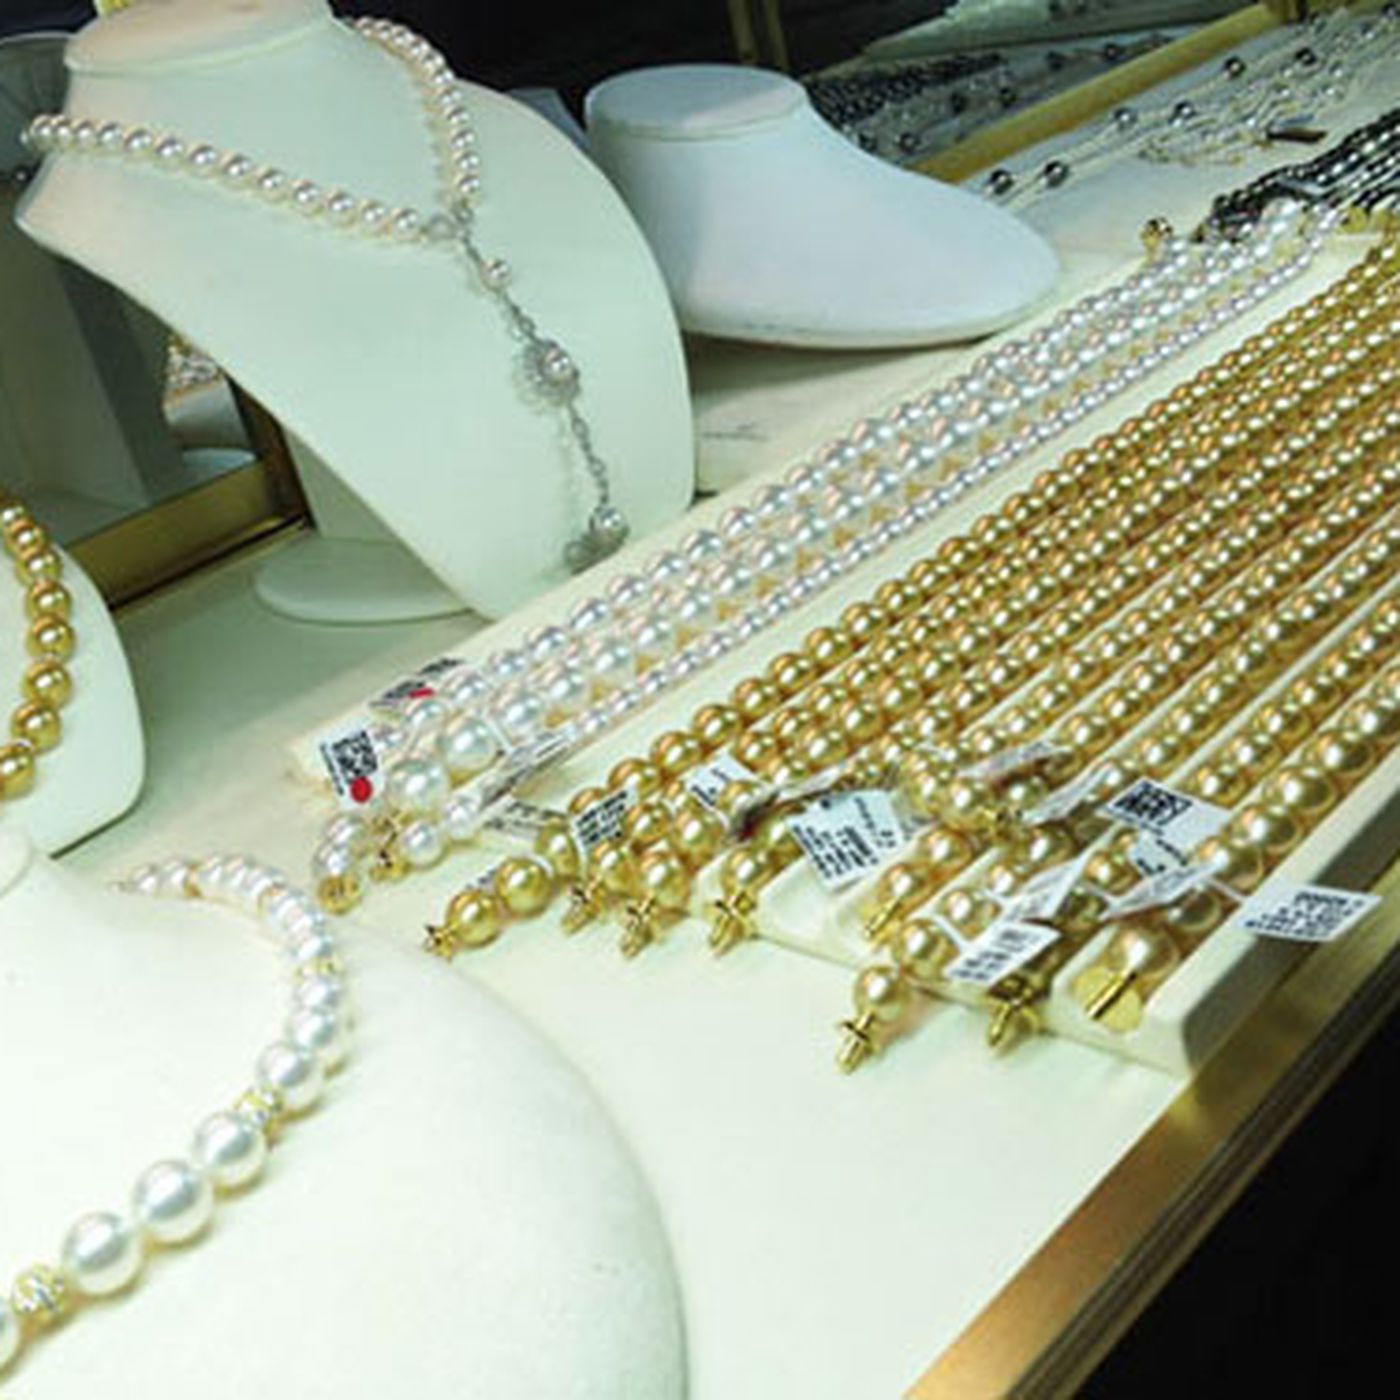 Mikimoto pearl jewelry new york sample sale thestylishcity. Com.